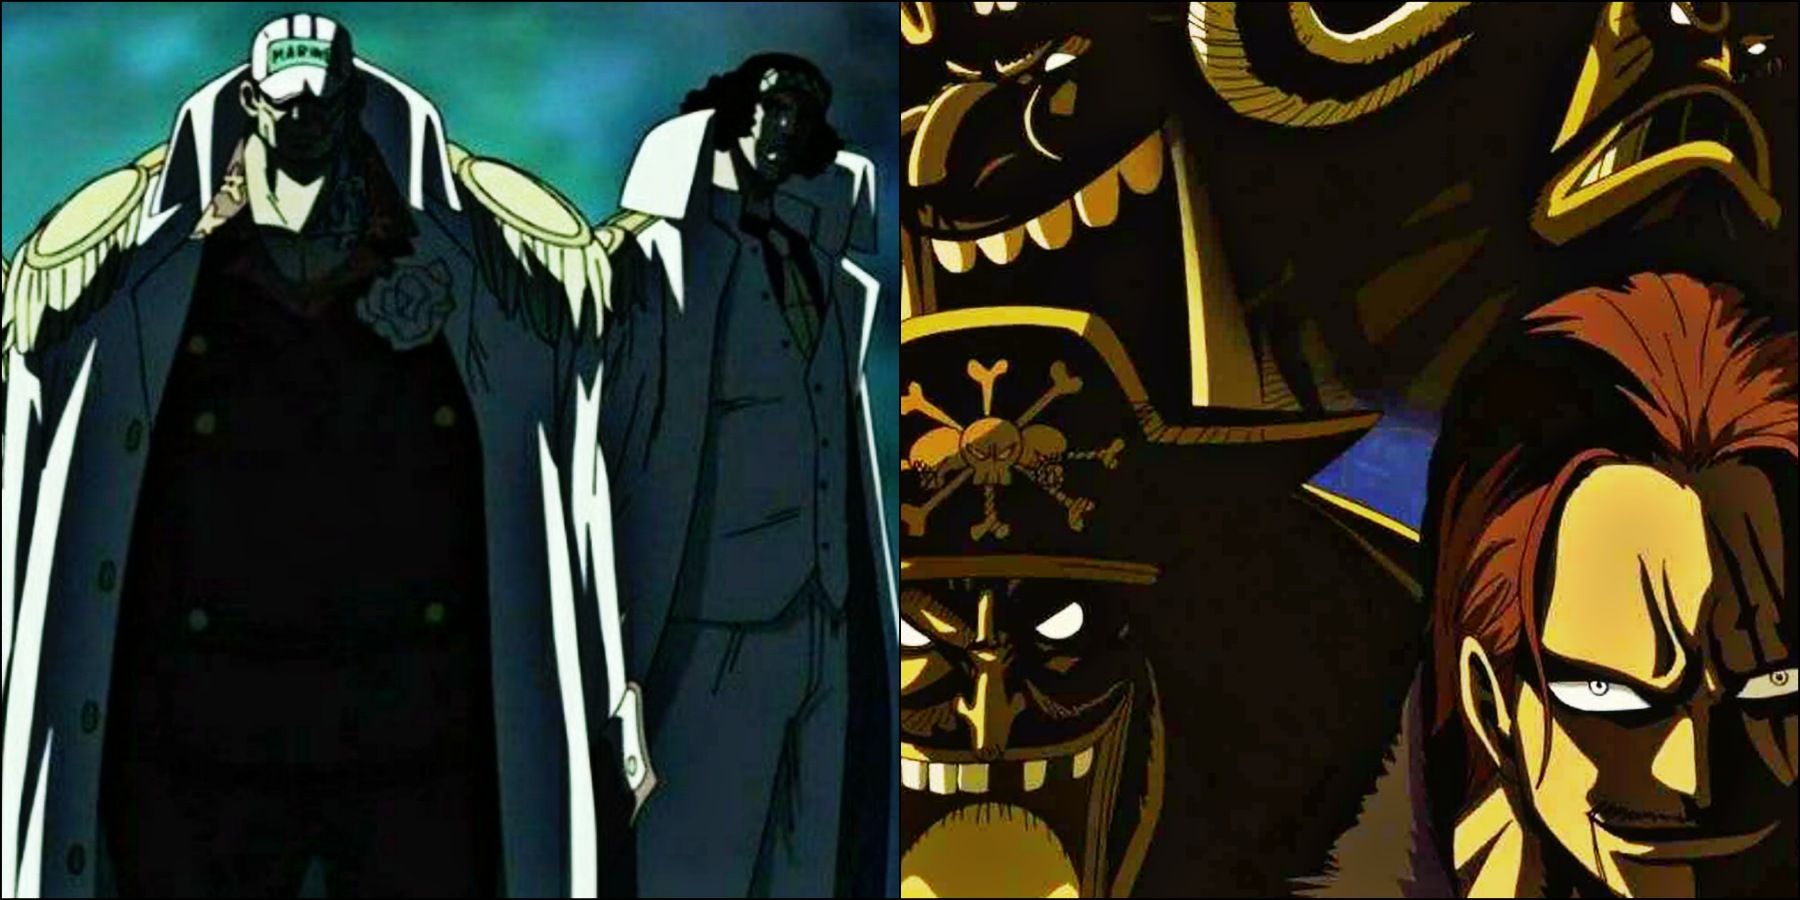 Yonko, Admirals and Shichibukai – Power Scaling In One Piece